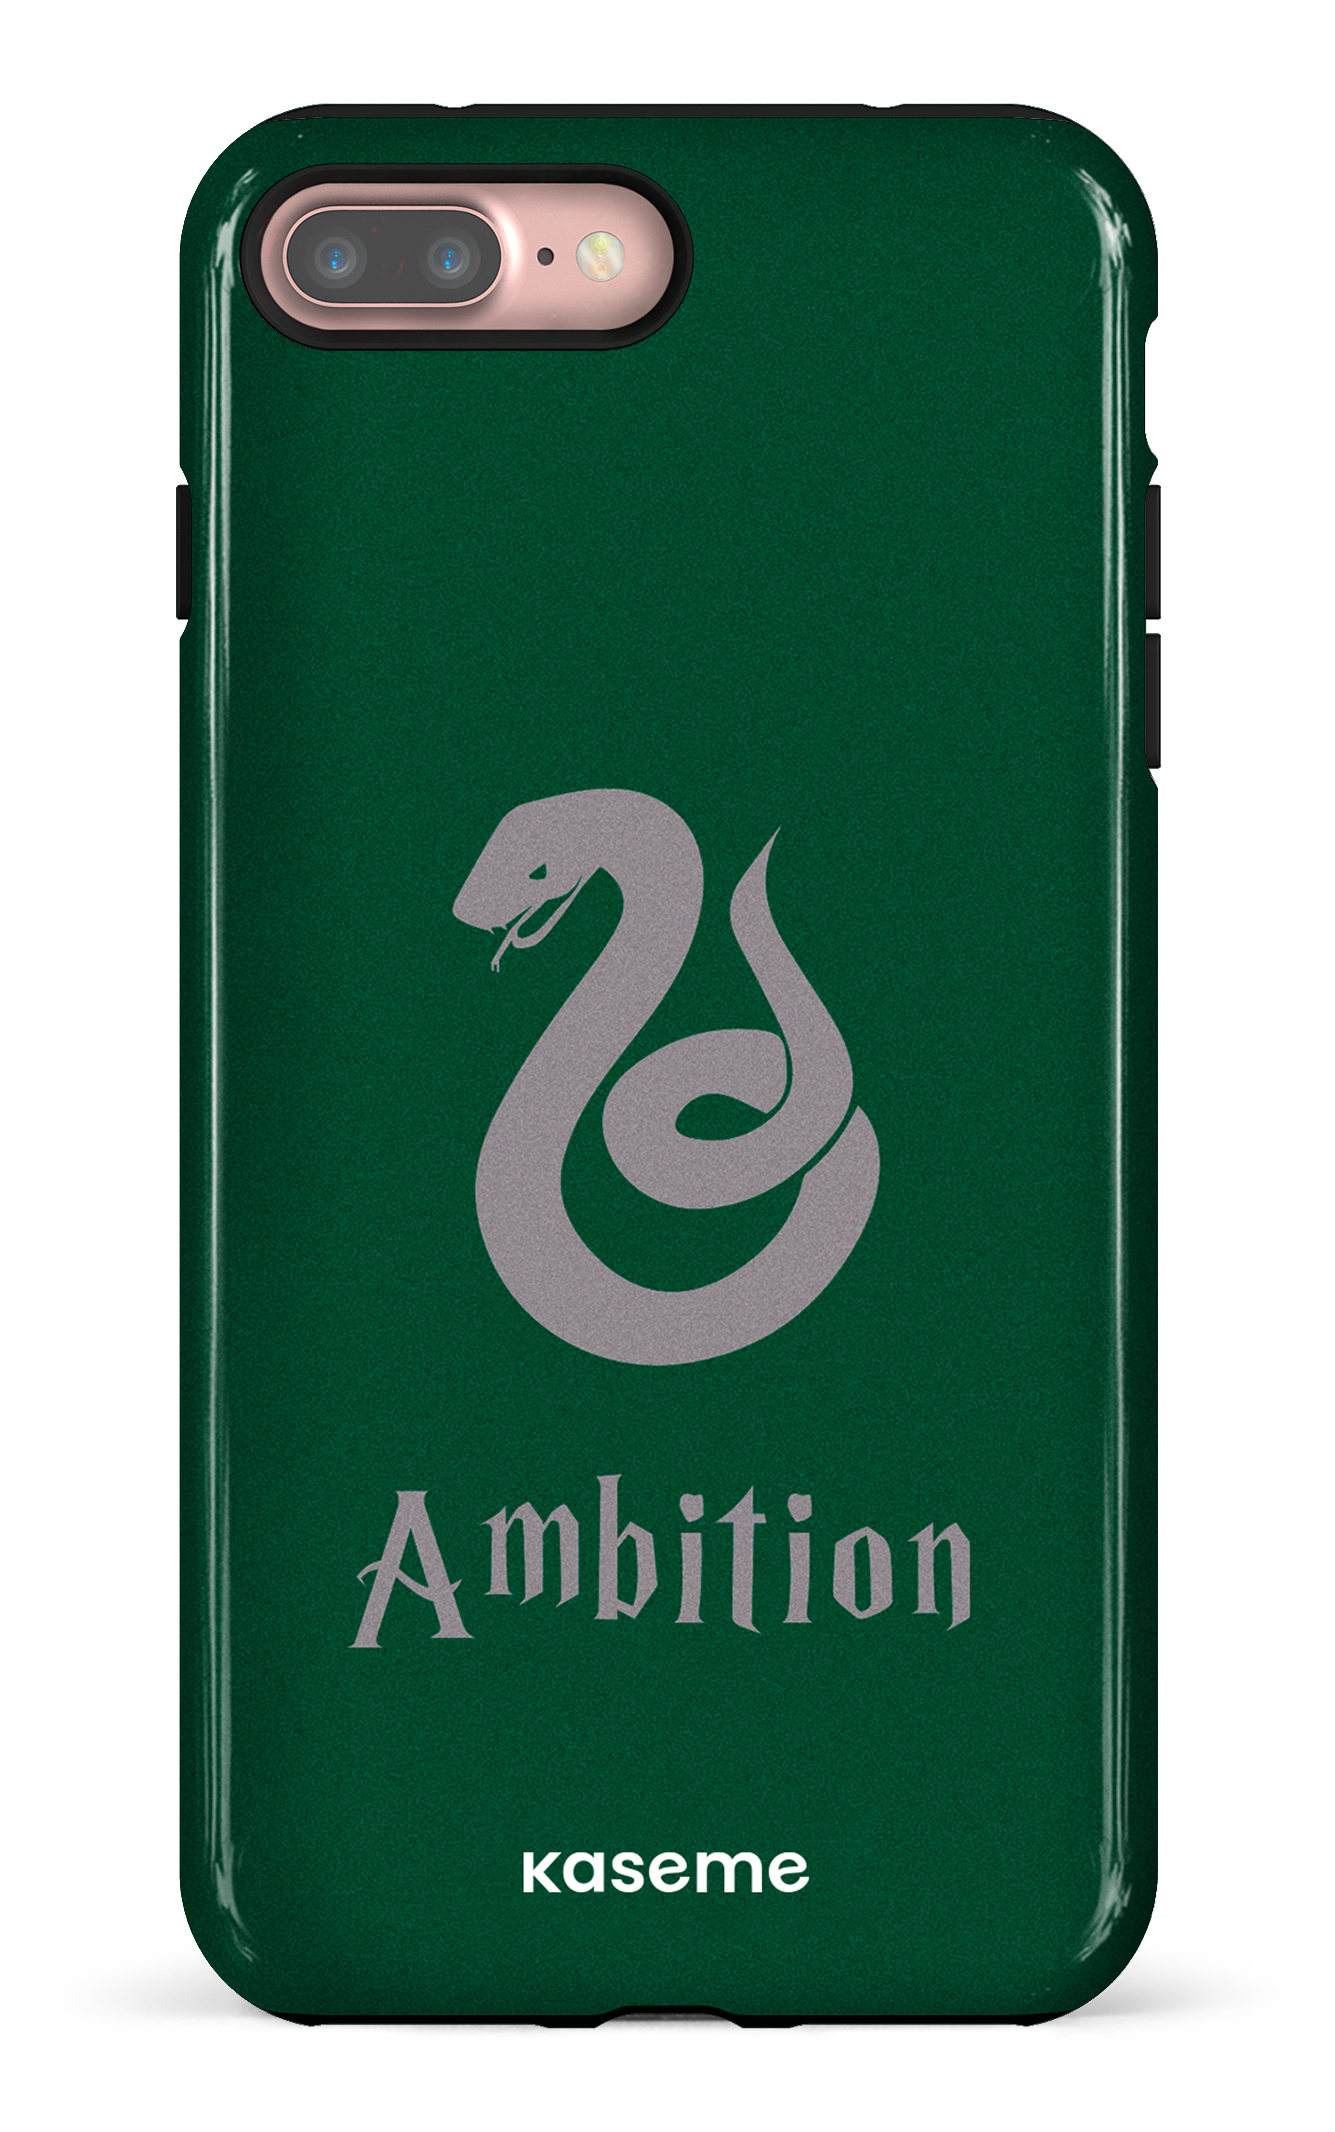 Ambition - iPhone 7 Plus